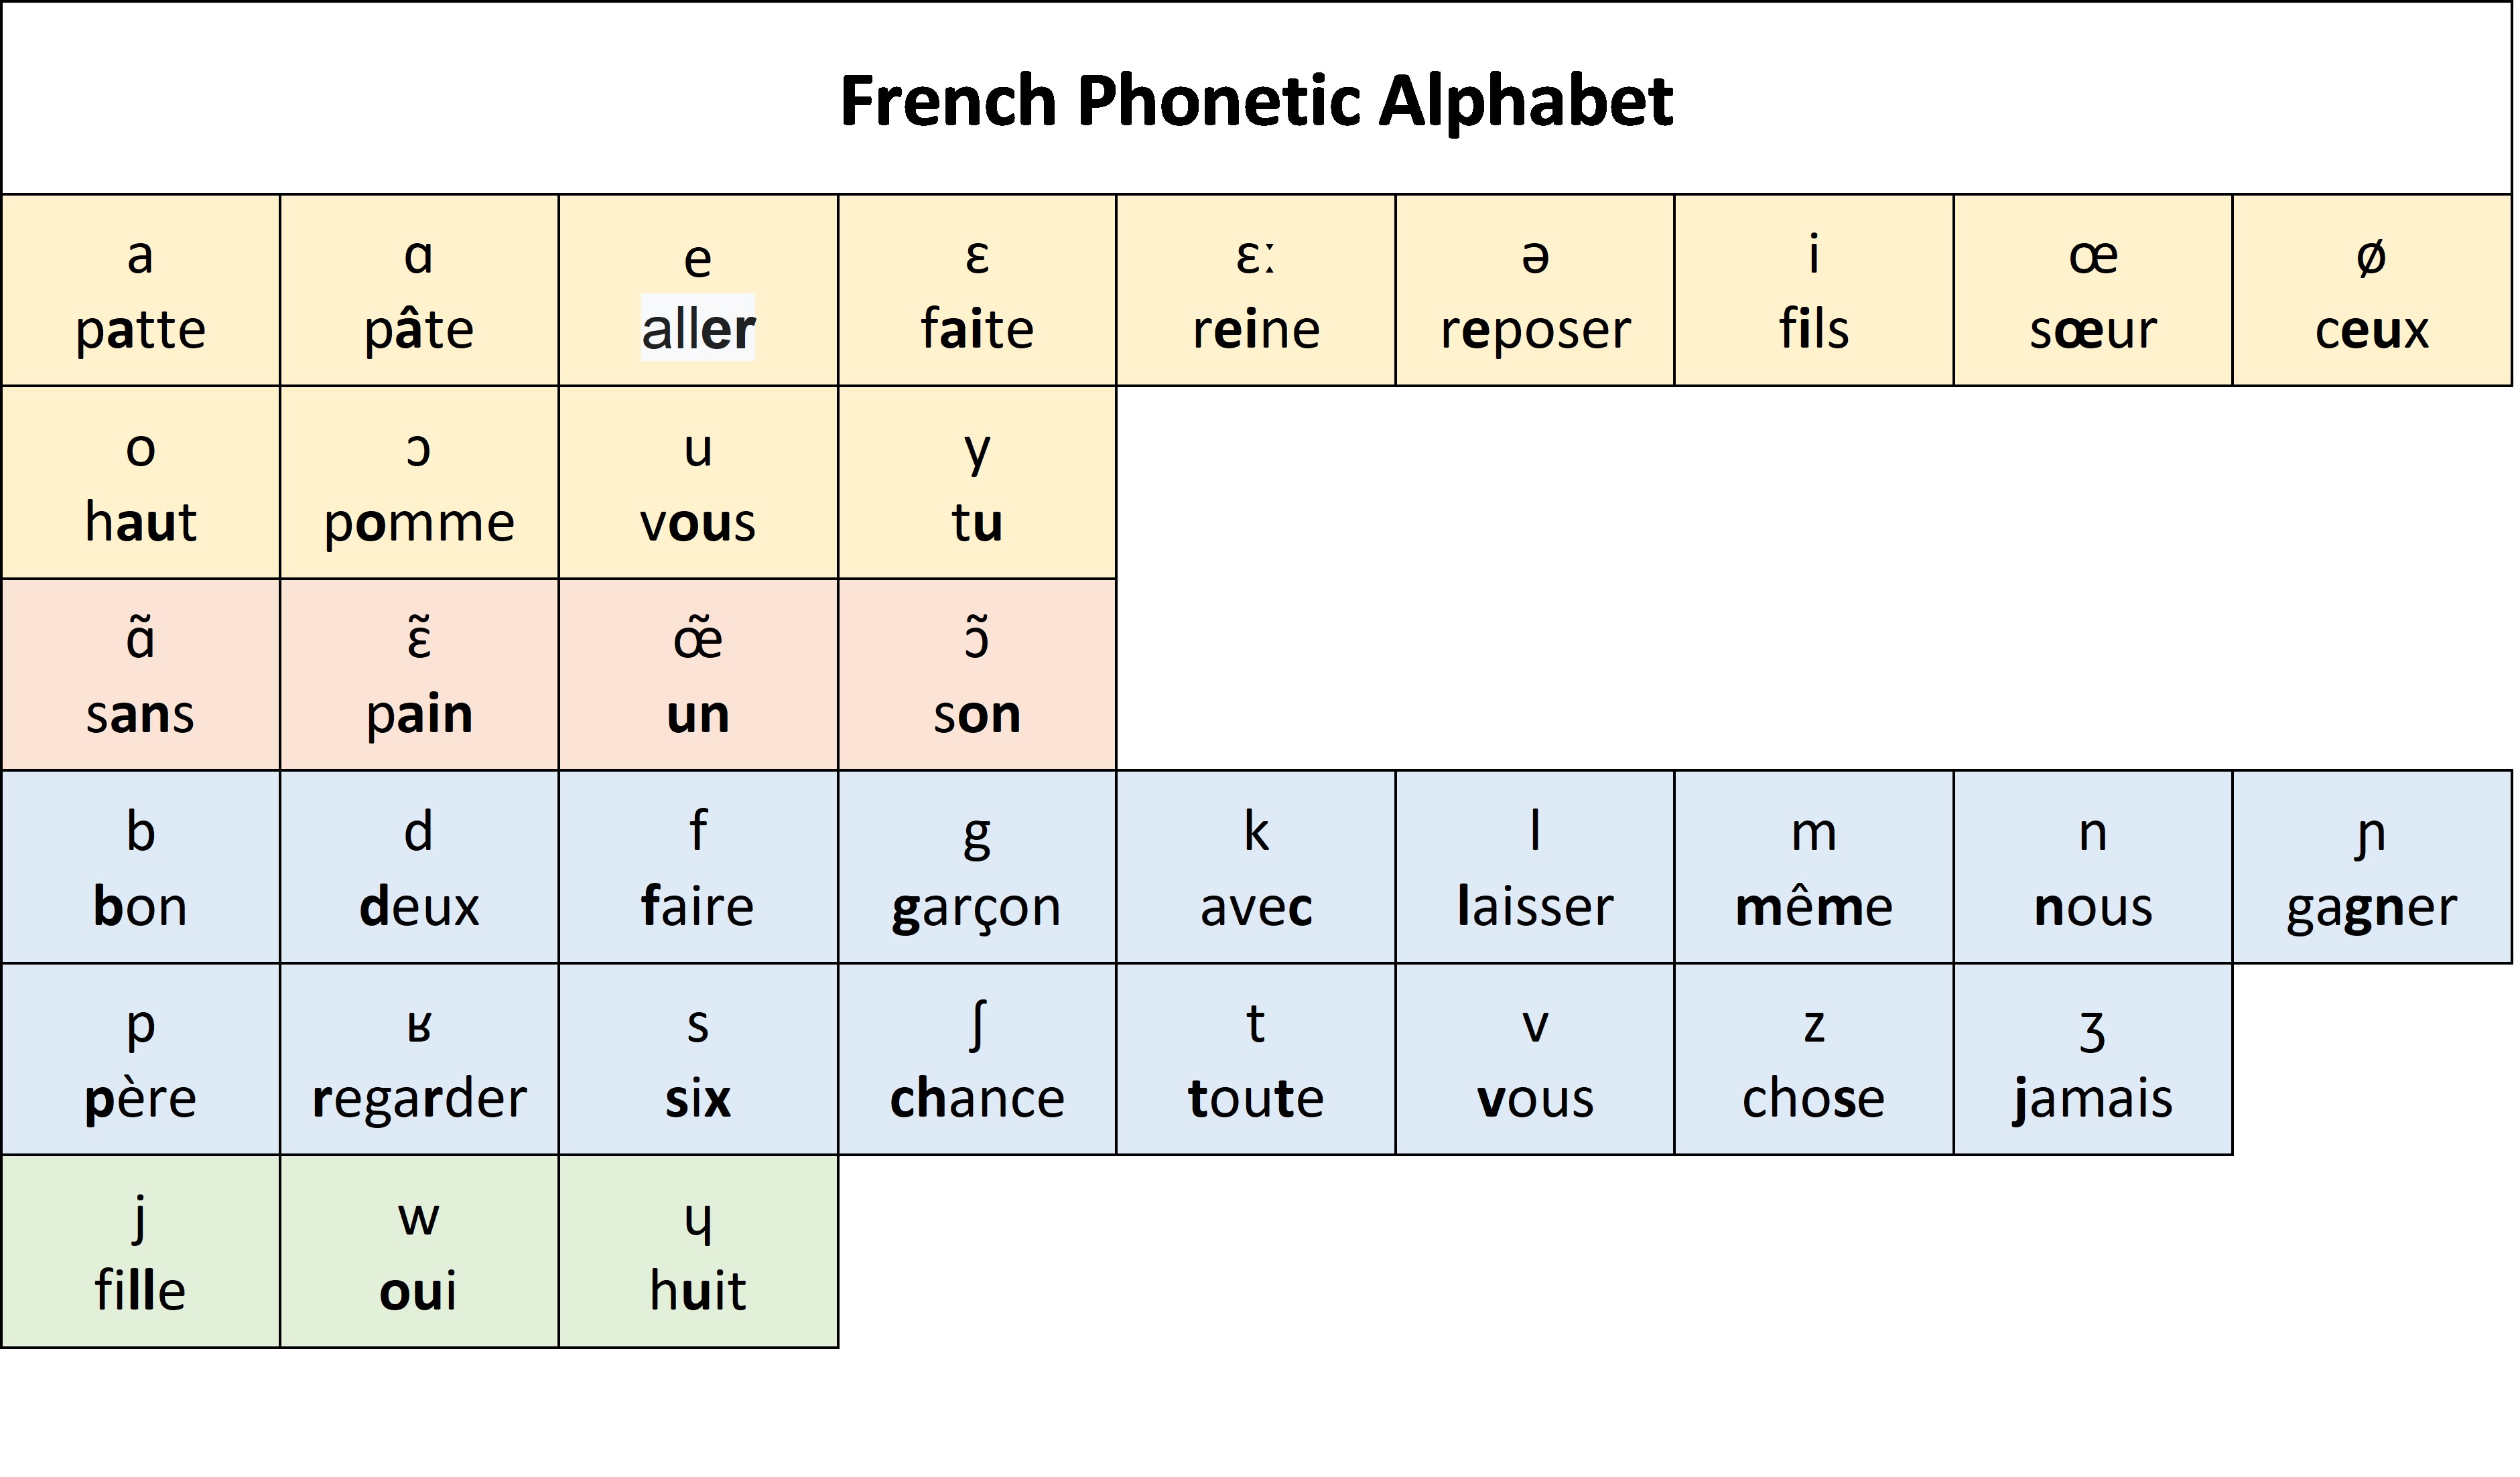 International Phonetic Alphabet (IPA) table